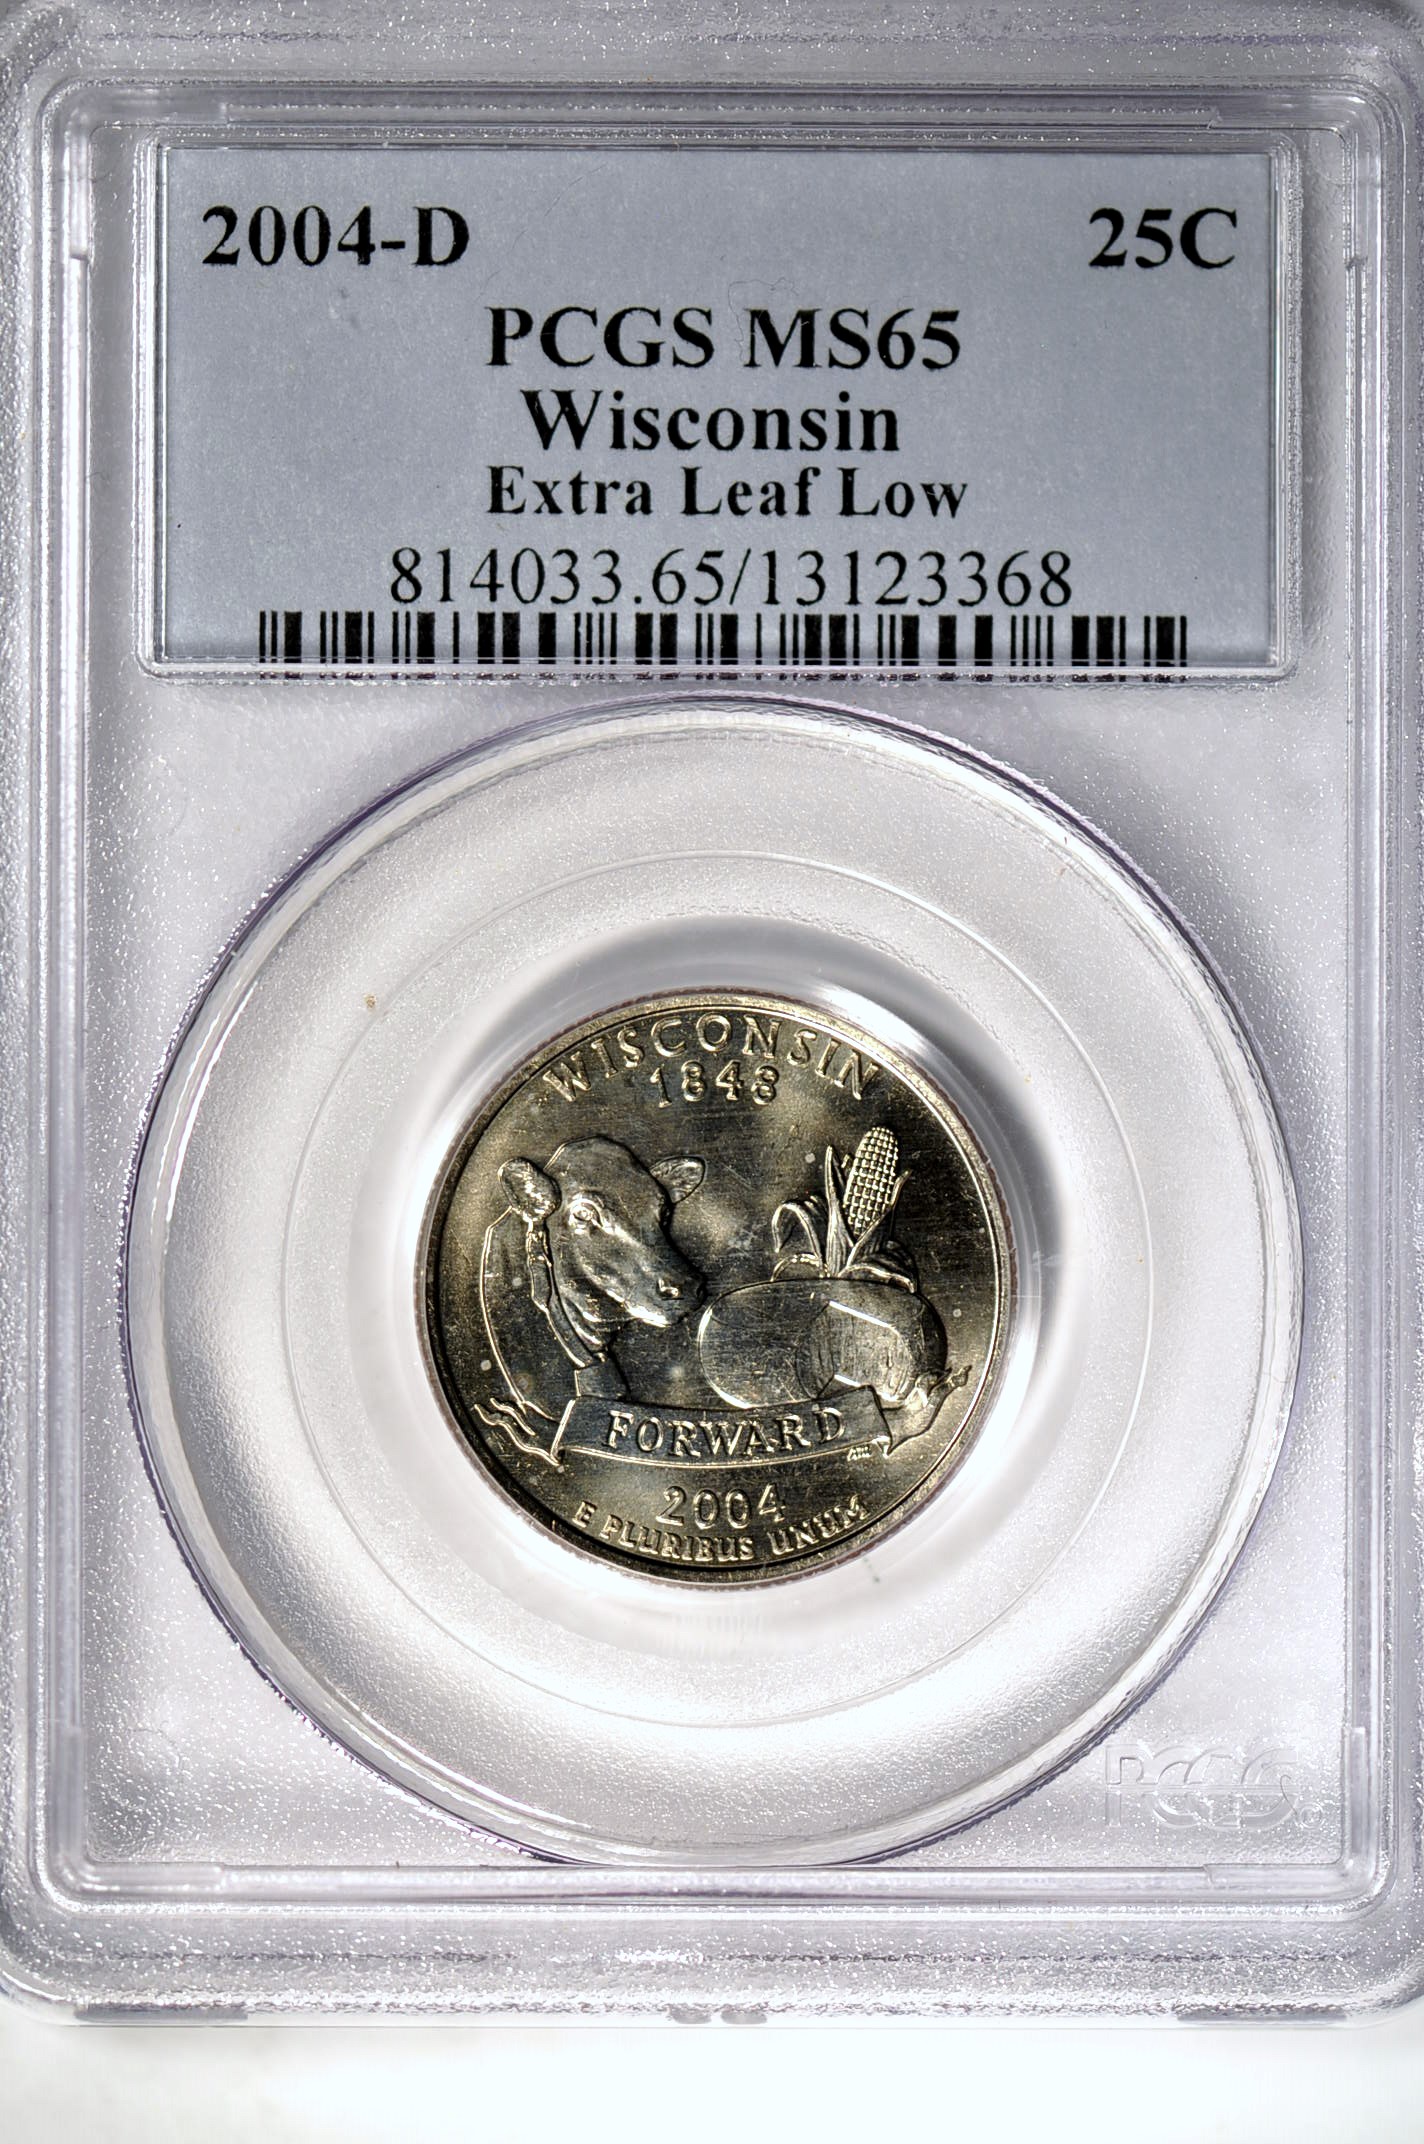 Download Washington 50 States Quarter (1999-2008) - Coins for sale on Collectors Corner